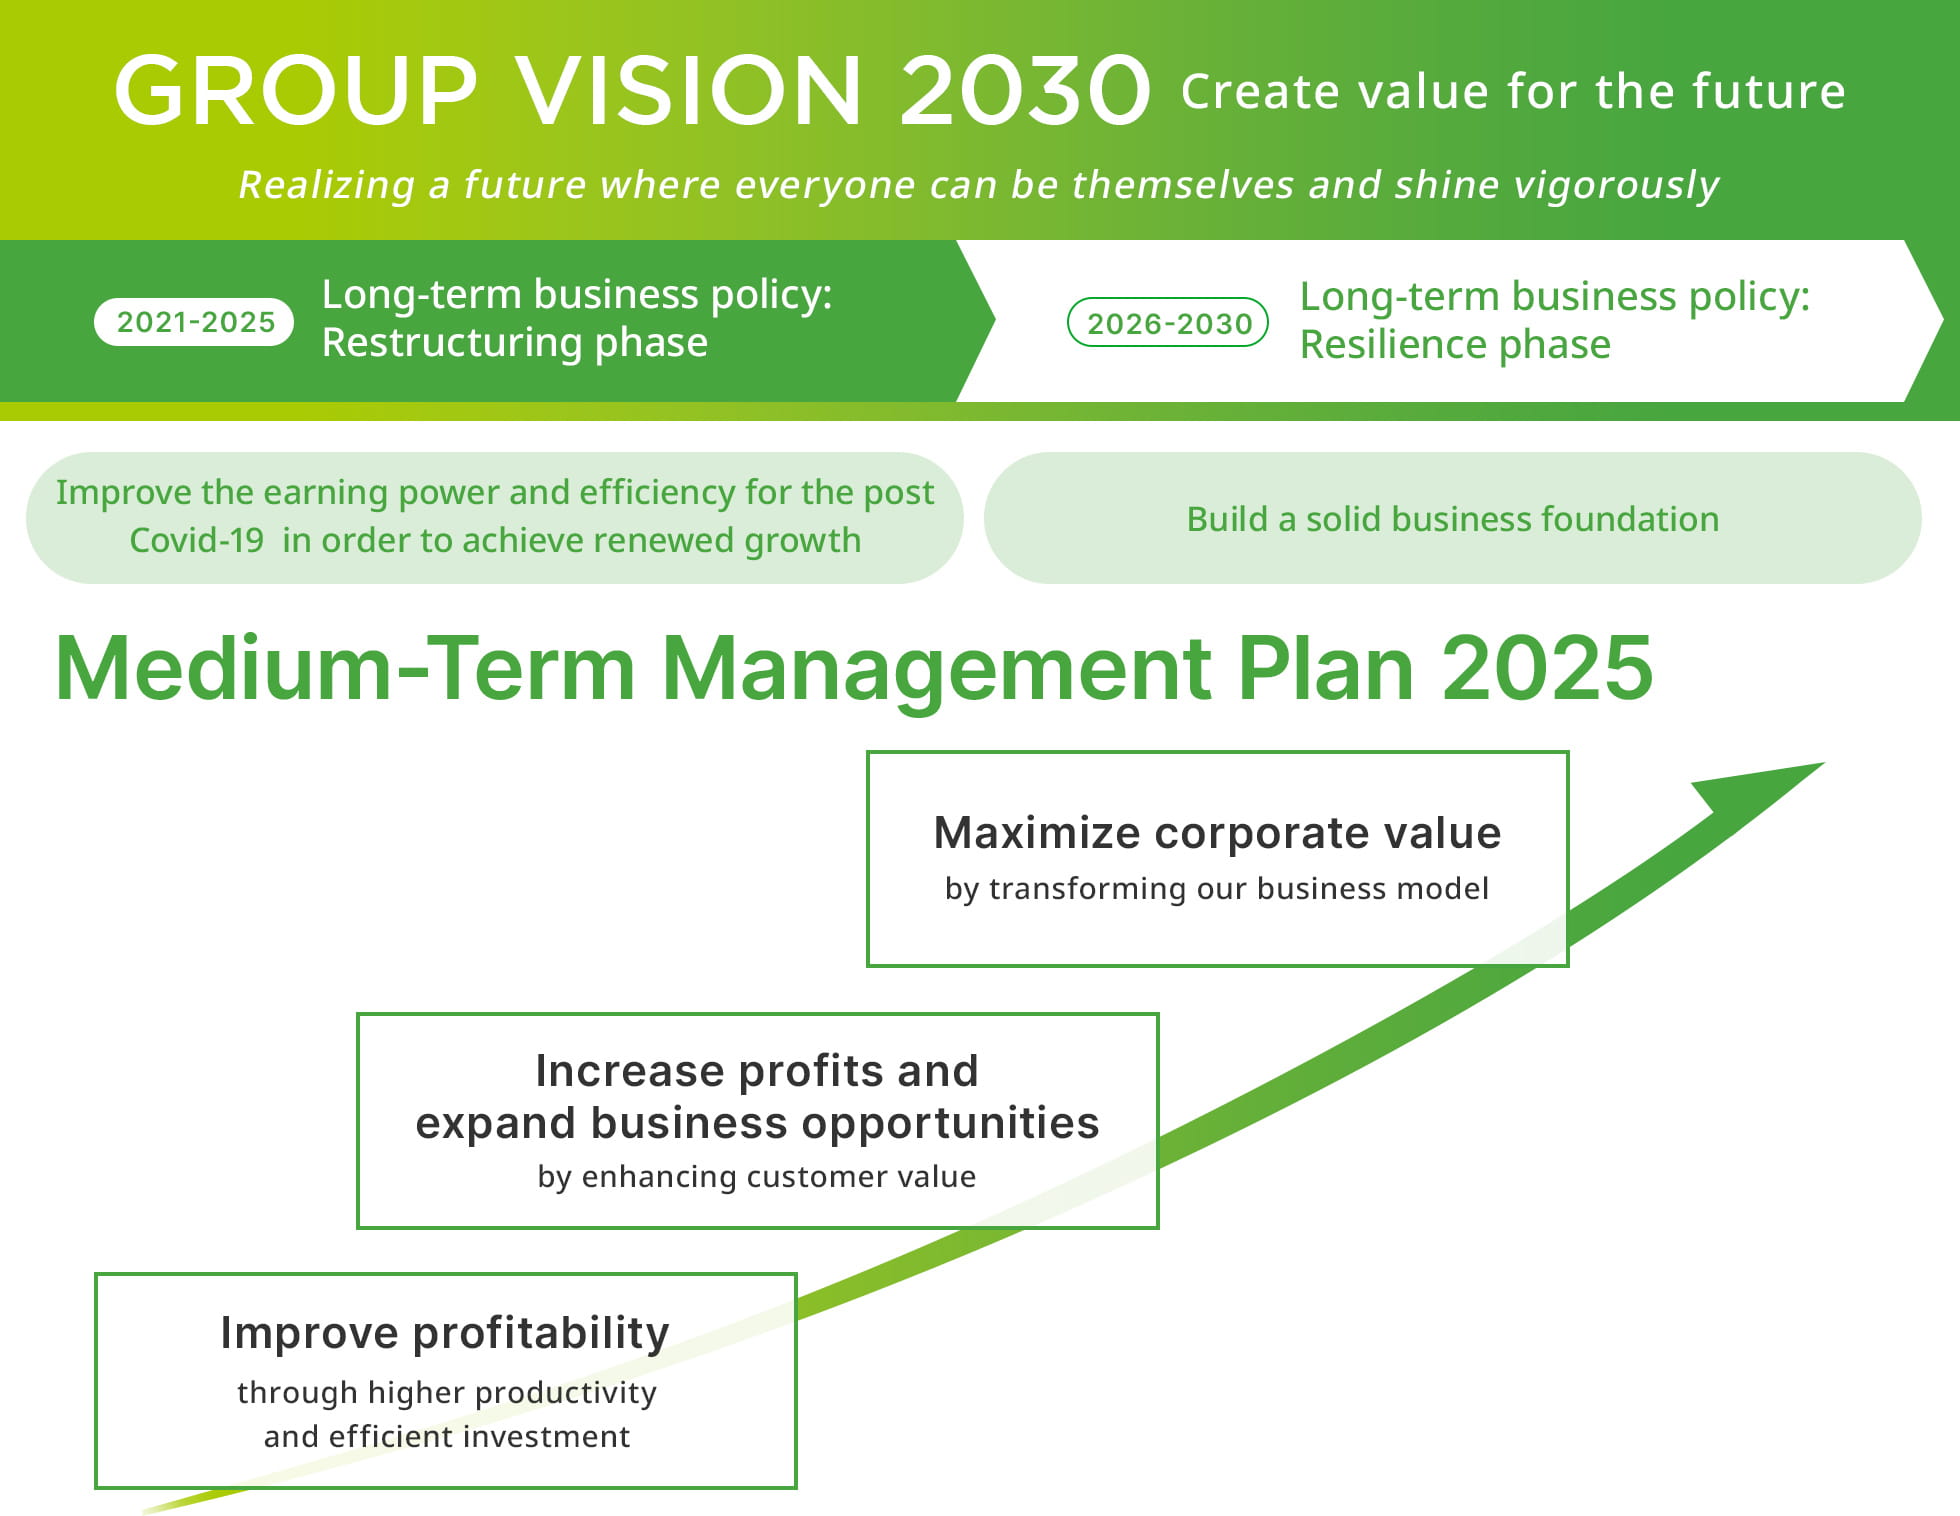 Medium-Term Management Plan 2025